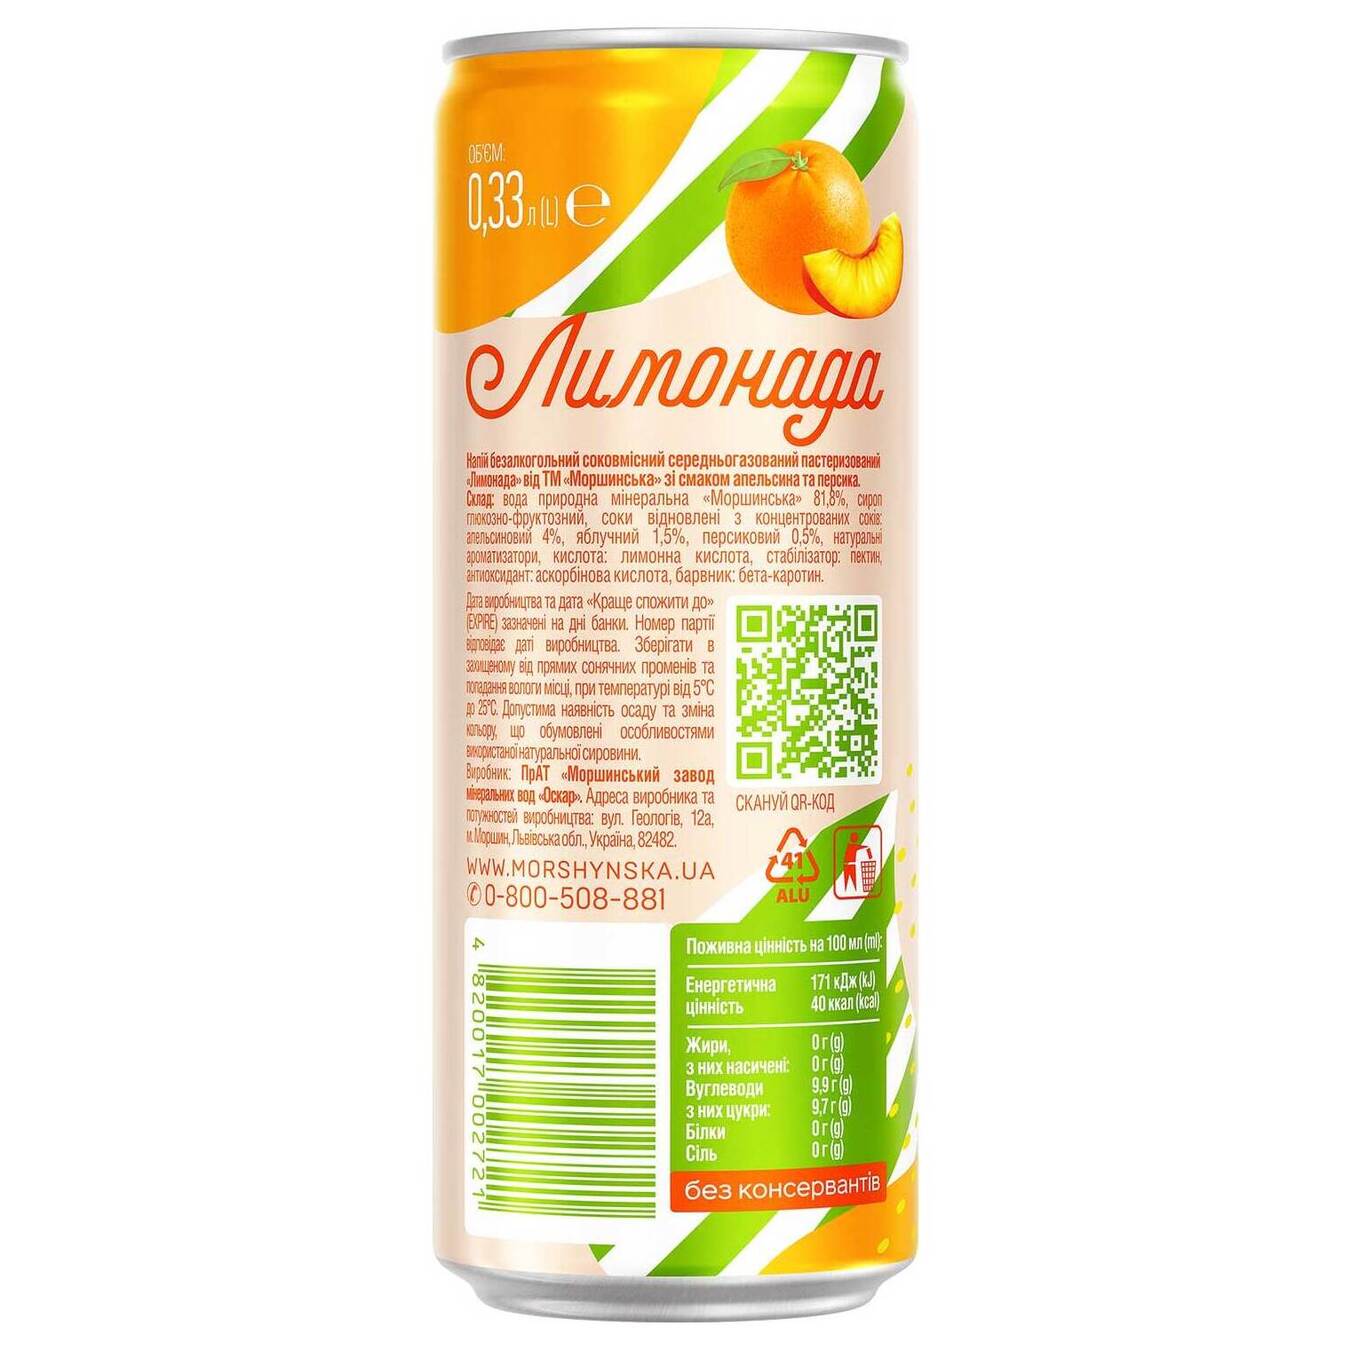 Carbonated drink Morshynska orange-peach lemonade 0.33 l iron can 2